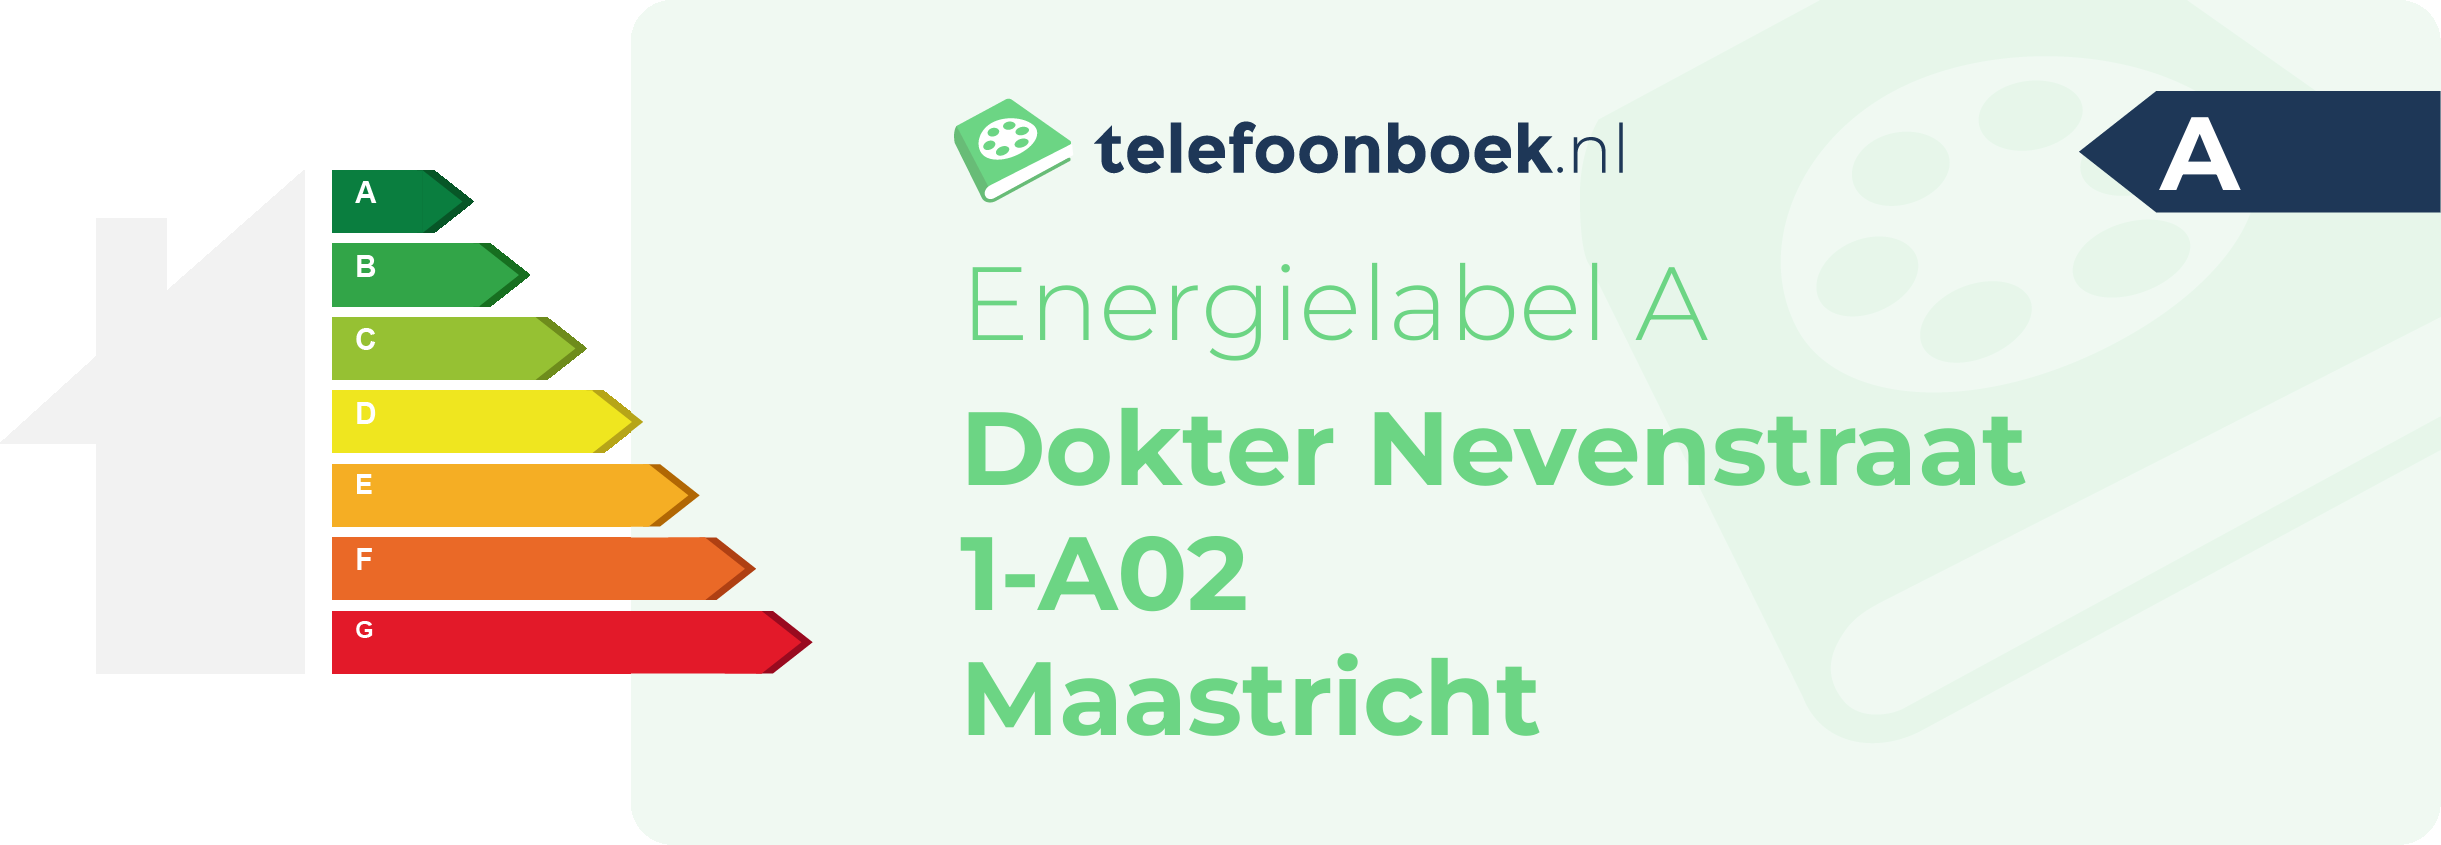 Energielabel Dokter Nevenstraat 1-A02 Maastricht